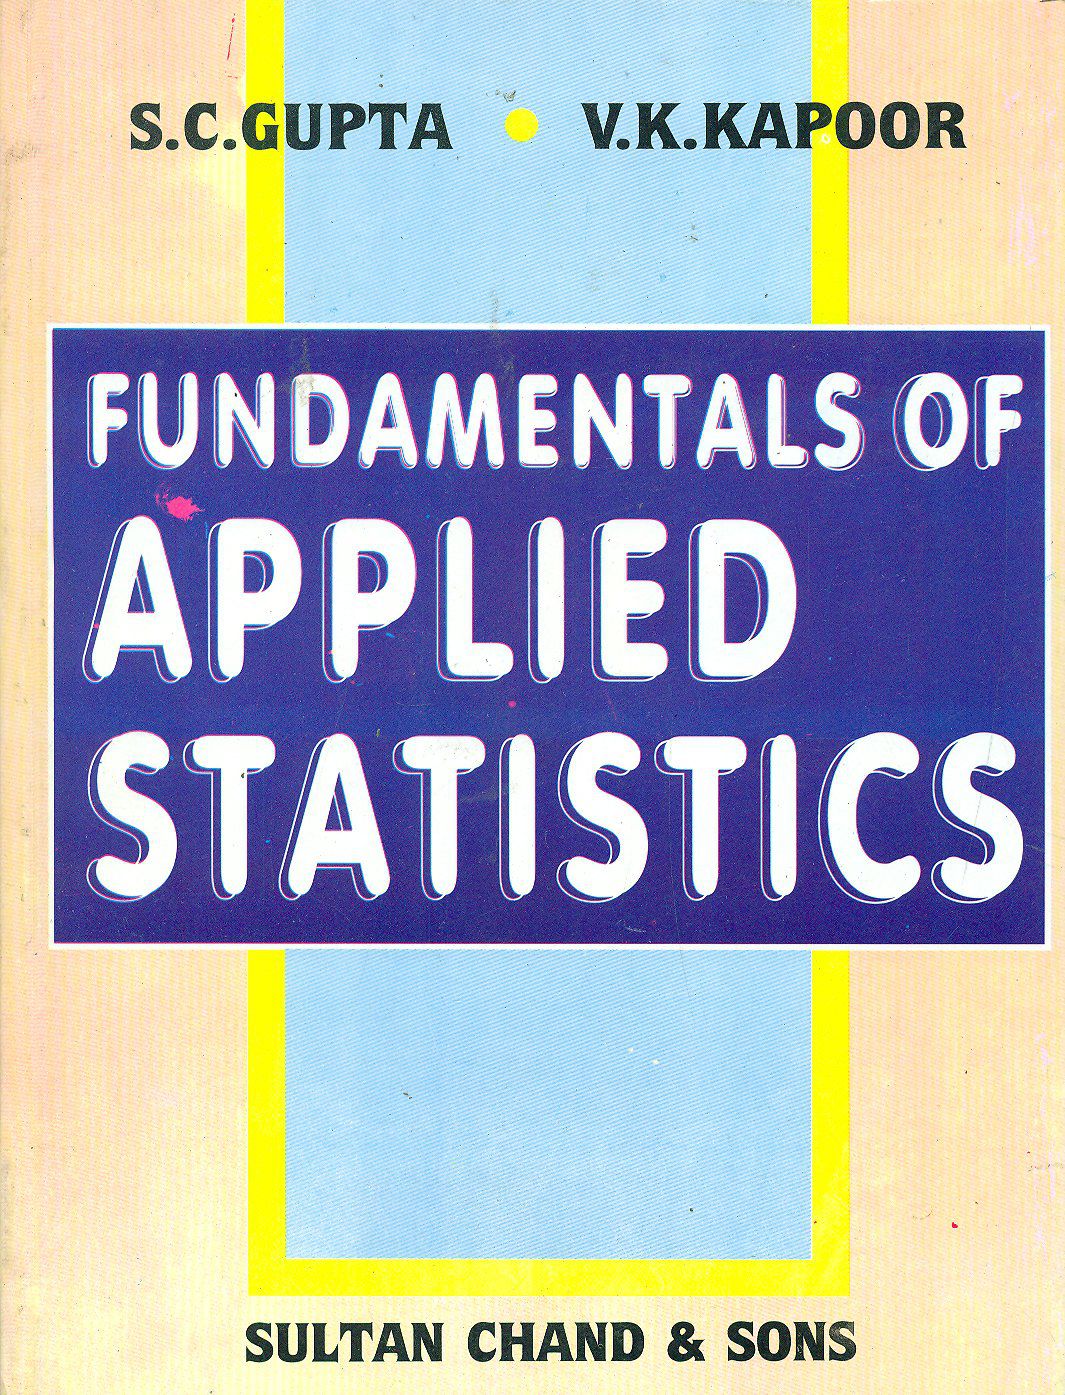     			Fundamentals of Applied Statistics Paperback by S.C. Gupta and V.K. Kapoor